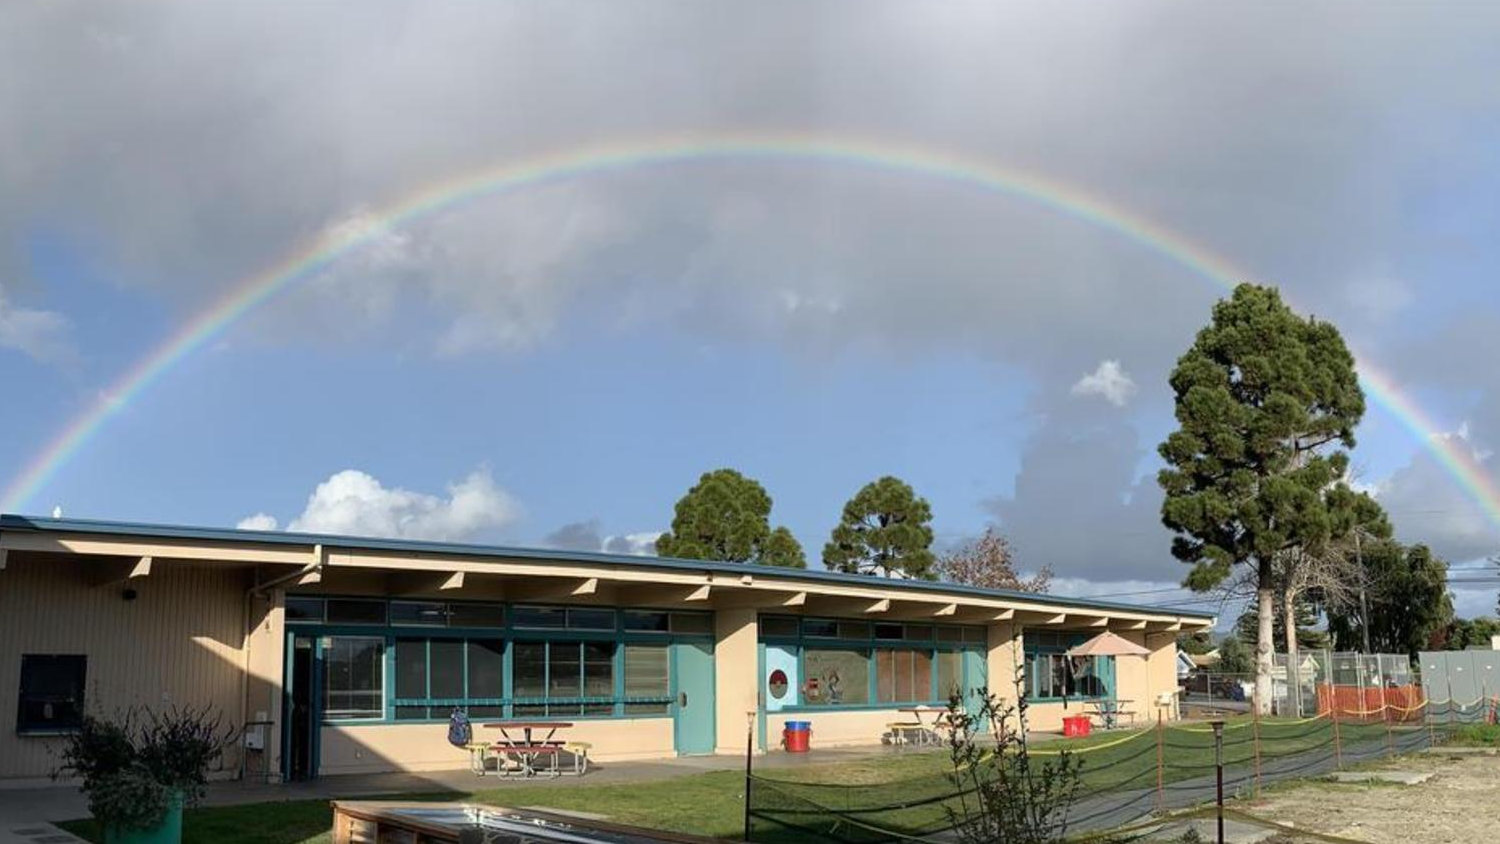 Harloe Elementary with rainbow